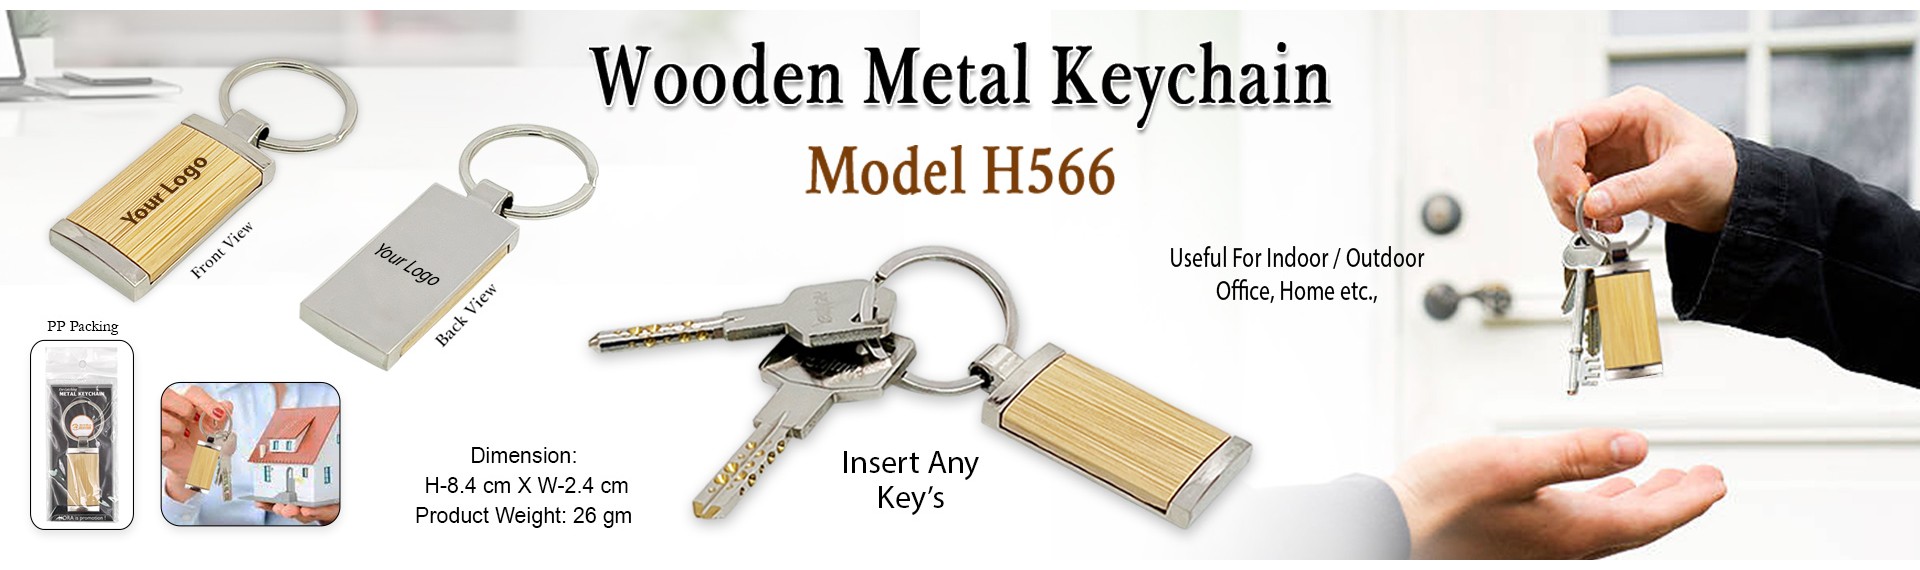 Metal Keychain566